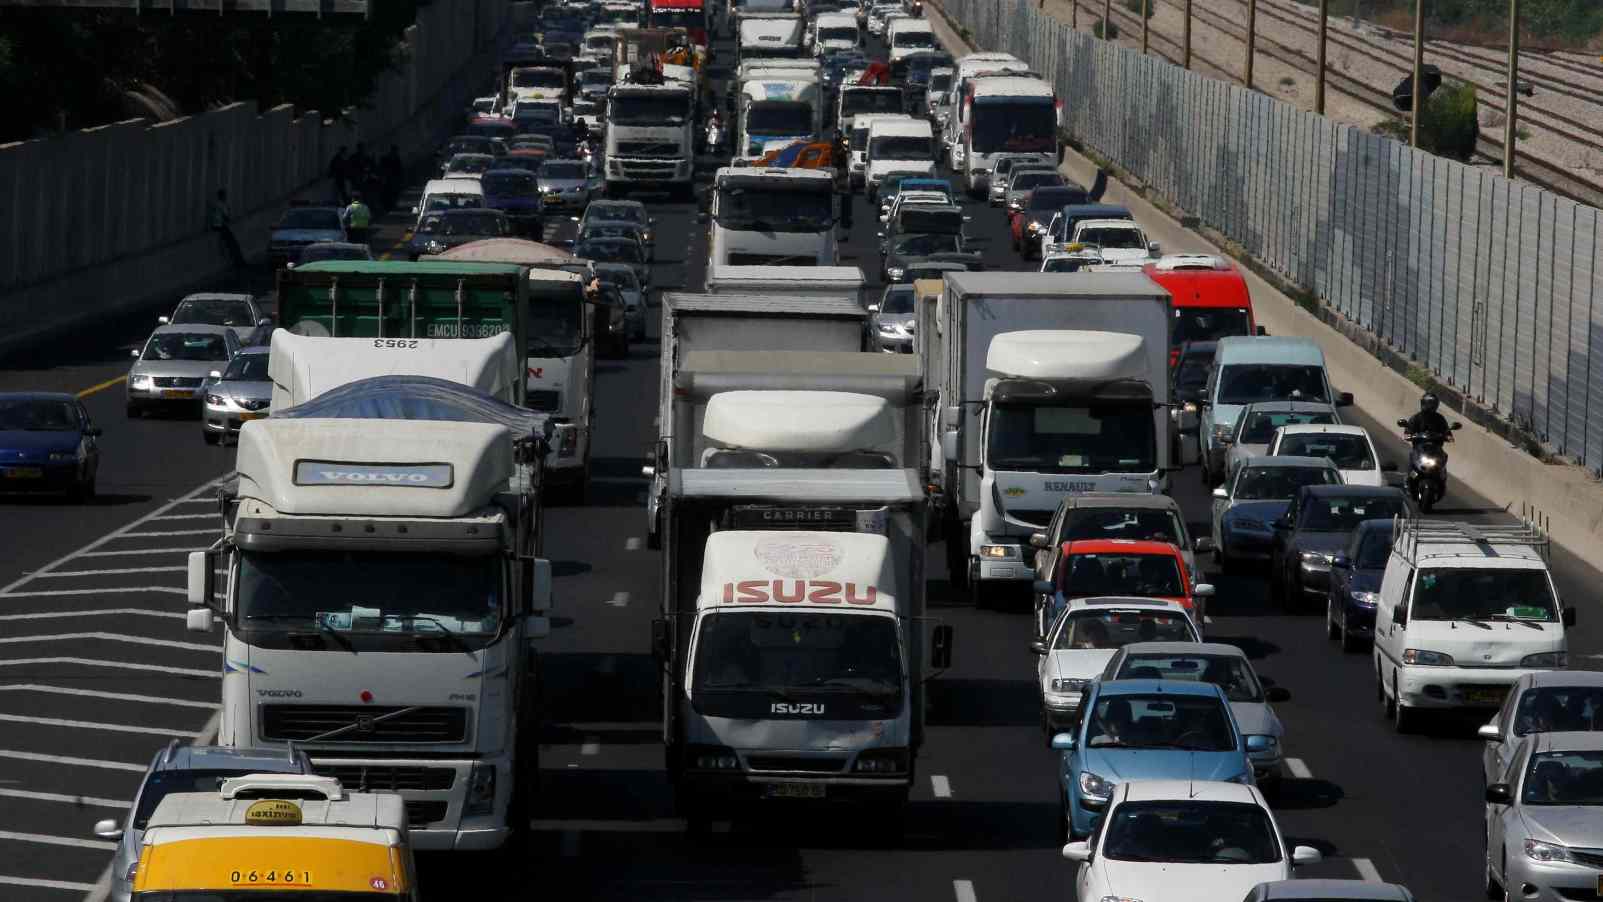 Israeli incentive-based pilot program aims to reduce traffic jams during rush hour. Photo by Roni Shutzer/FLASH90